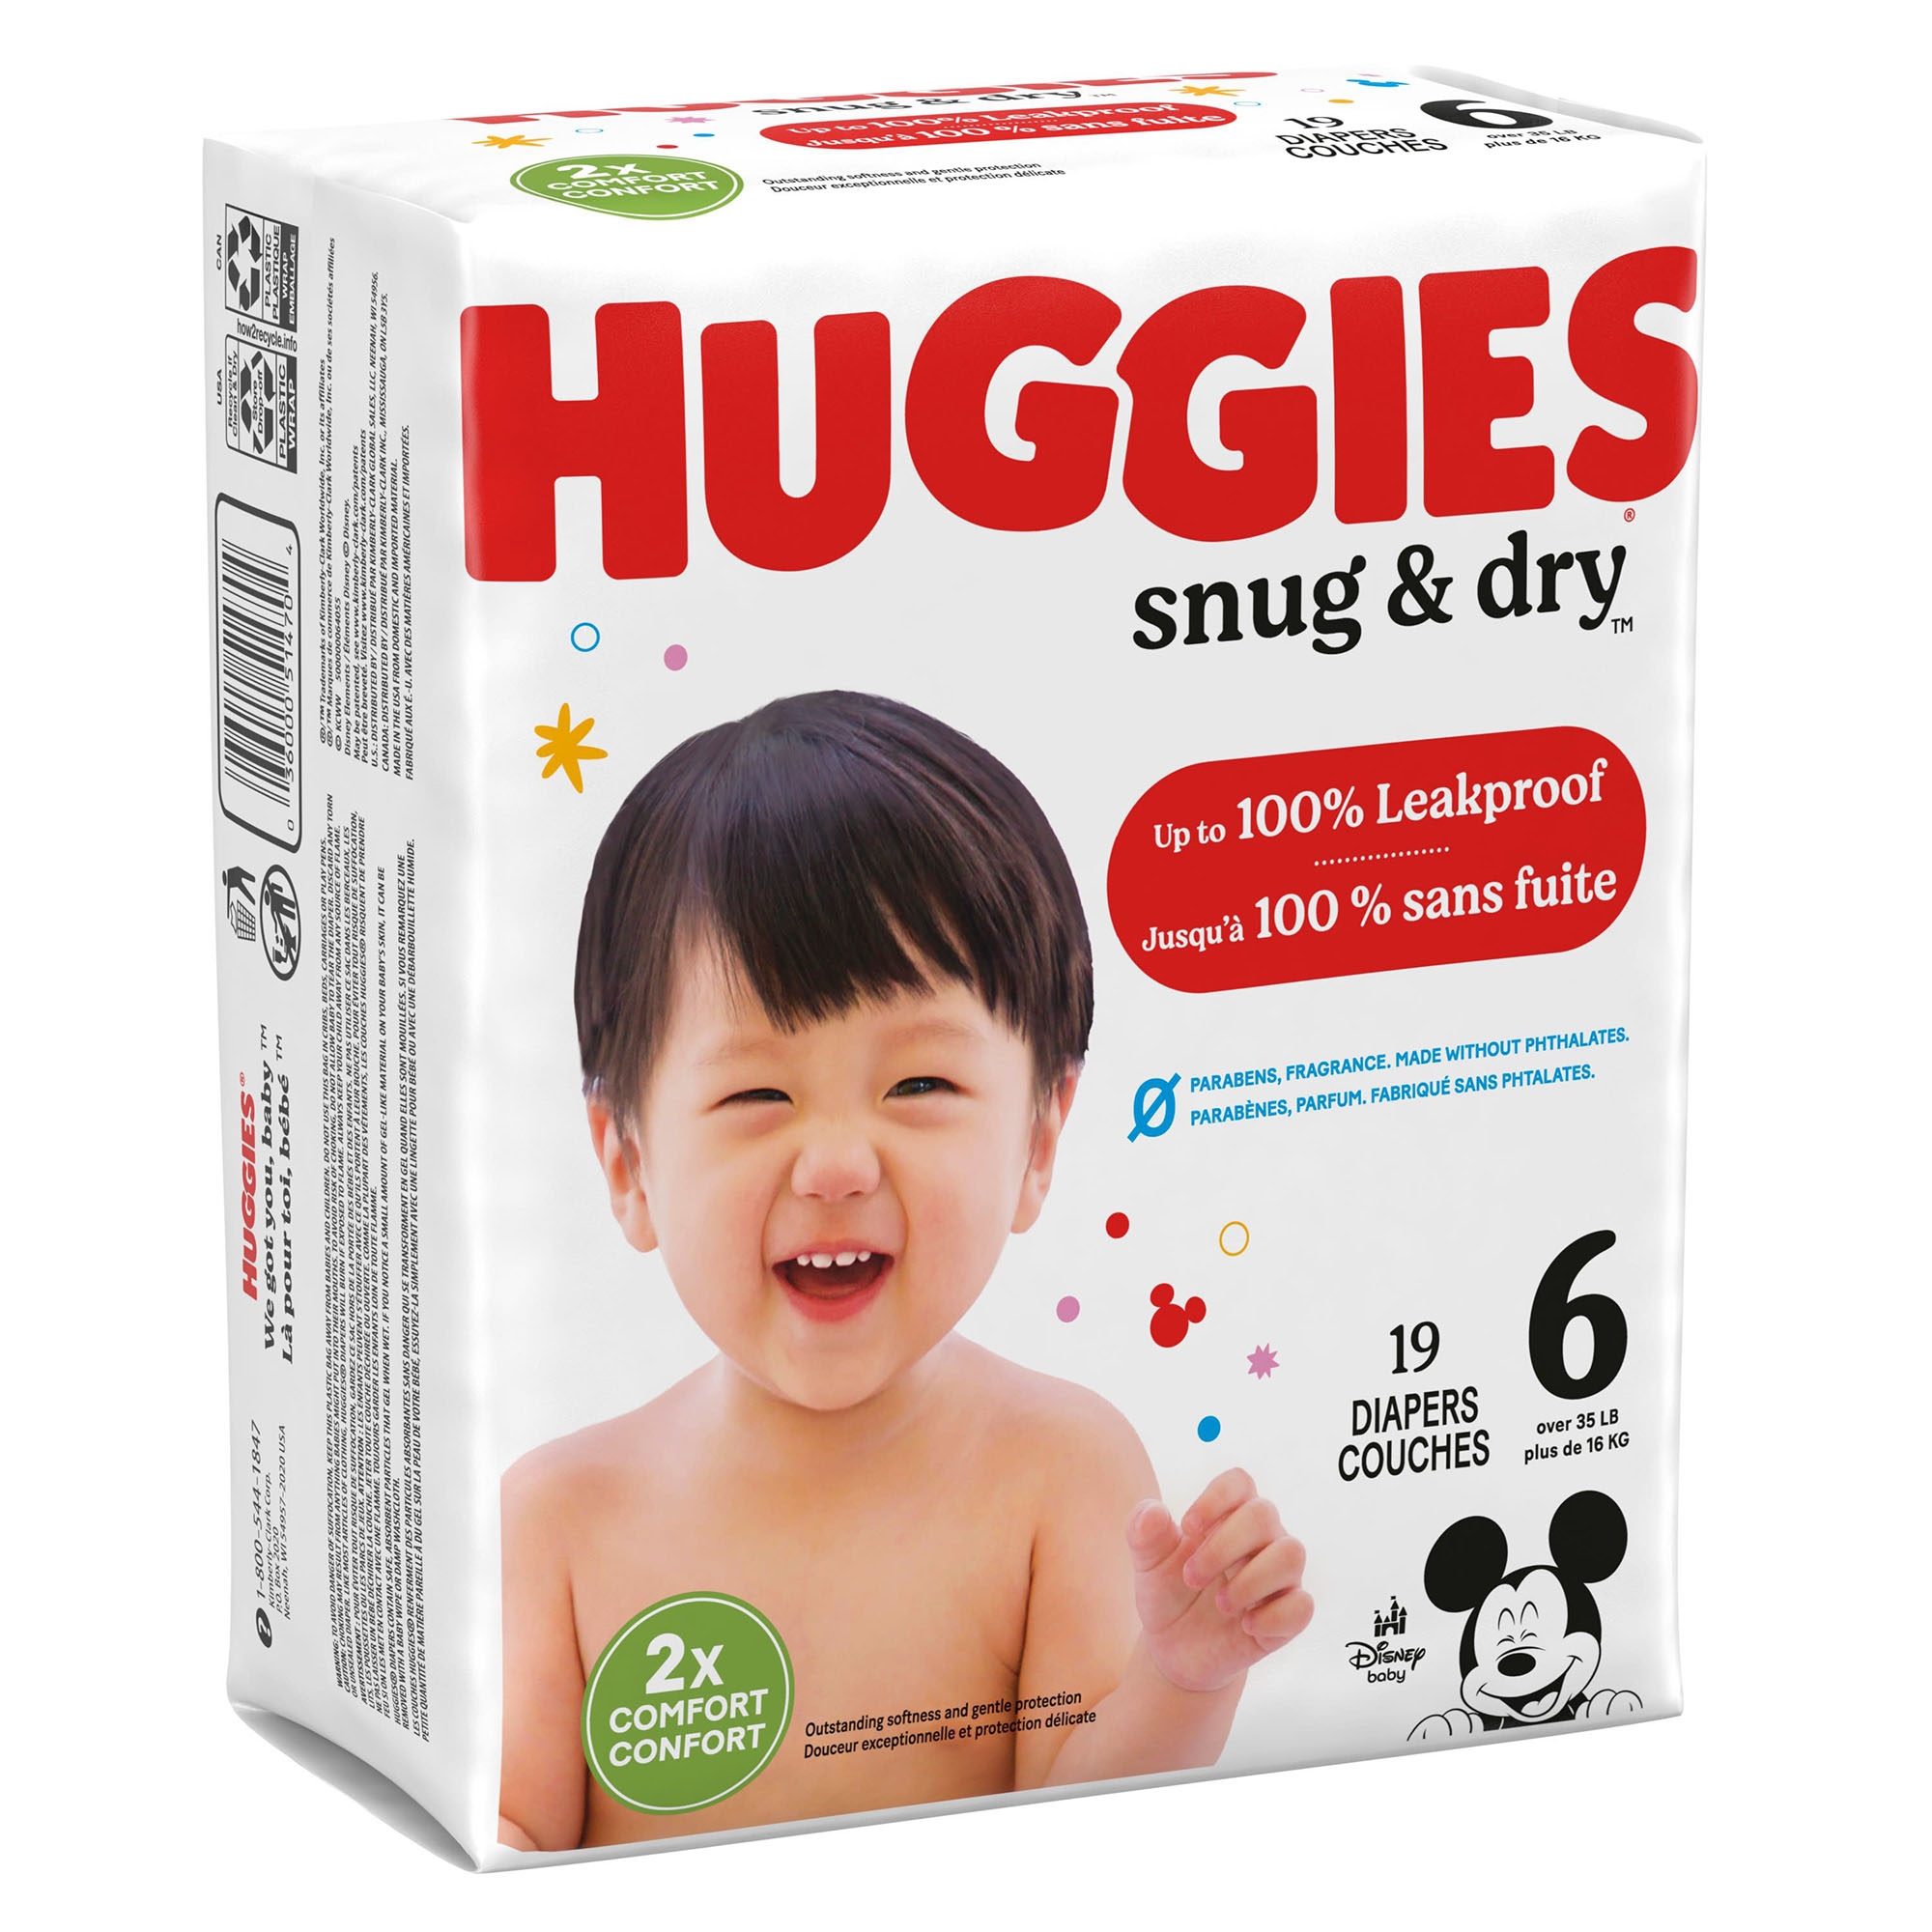 How To Stop Overnight Diaper Leak  Huggies Overnight vs Huggies Snug & Dry  Absorption Experiment 